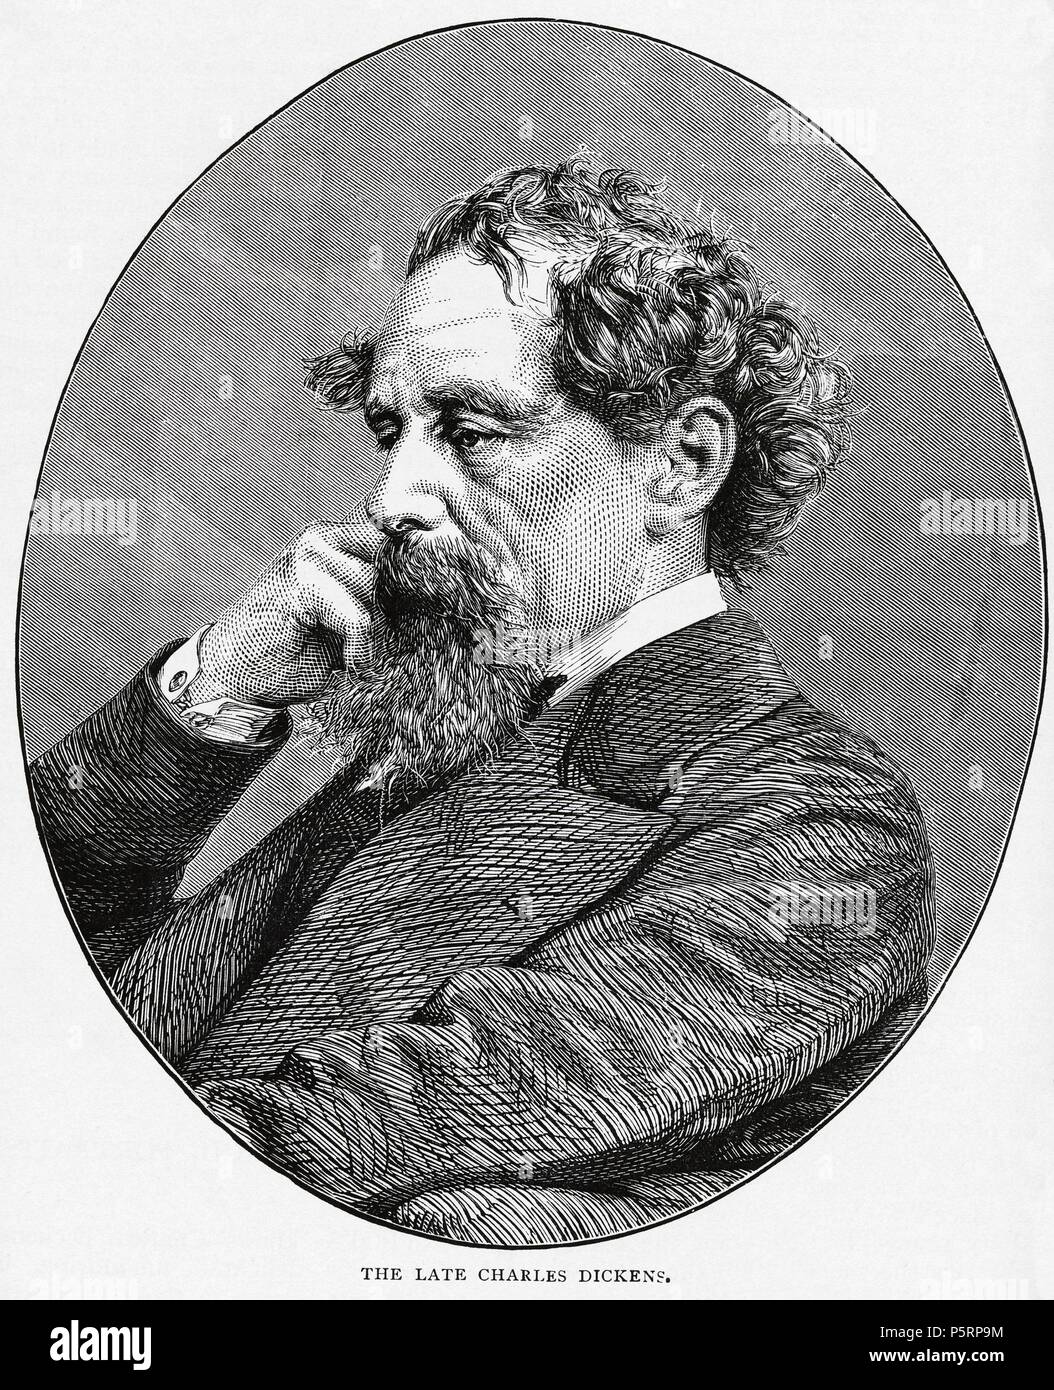 Charles John Huffam Dickens (1812-1870), famoso novelista inglés. Grabado de 1886. Foto Stock